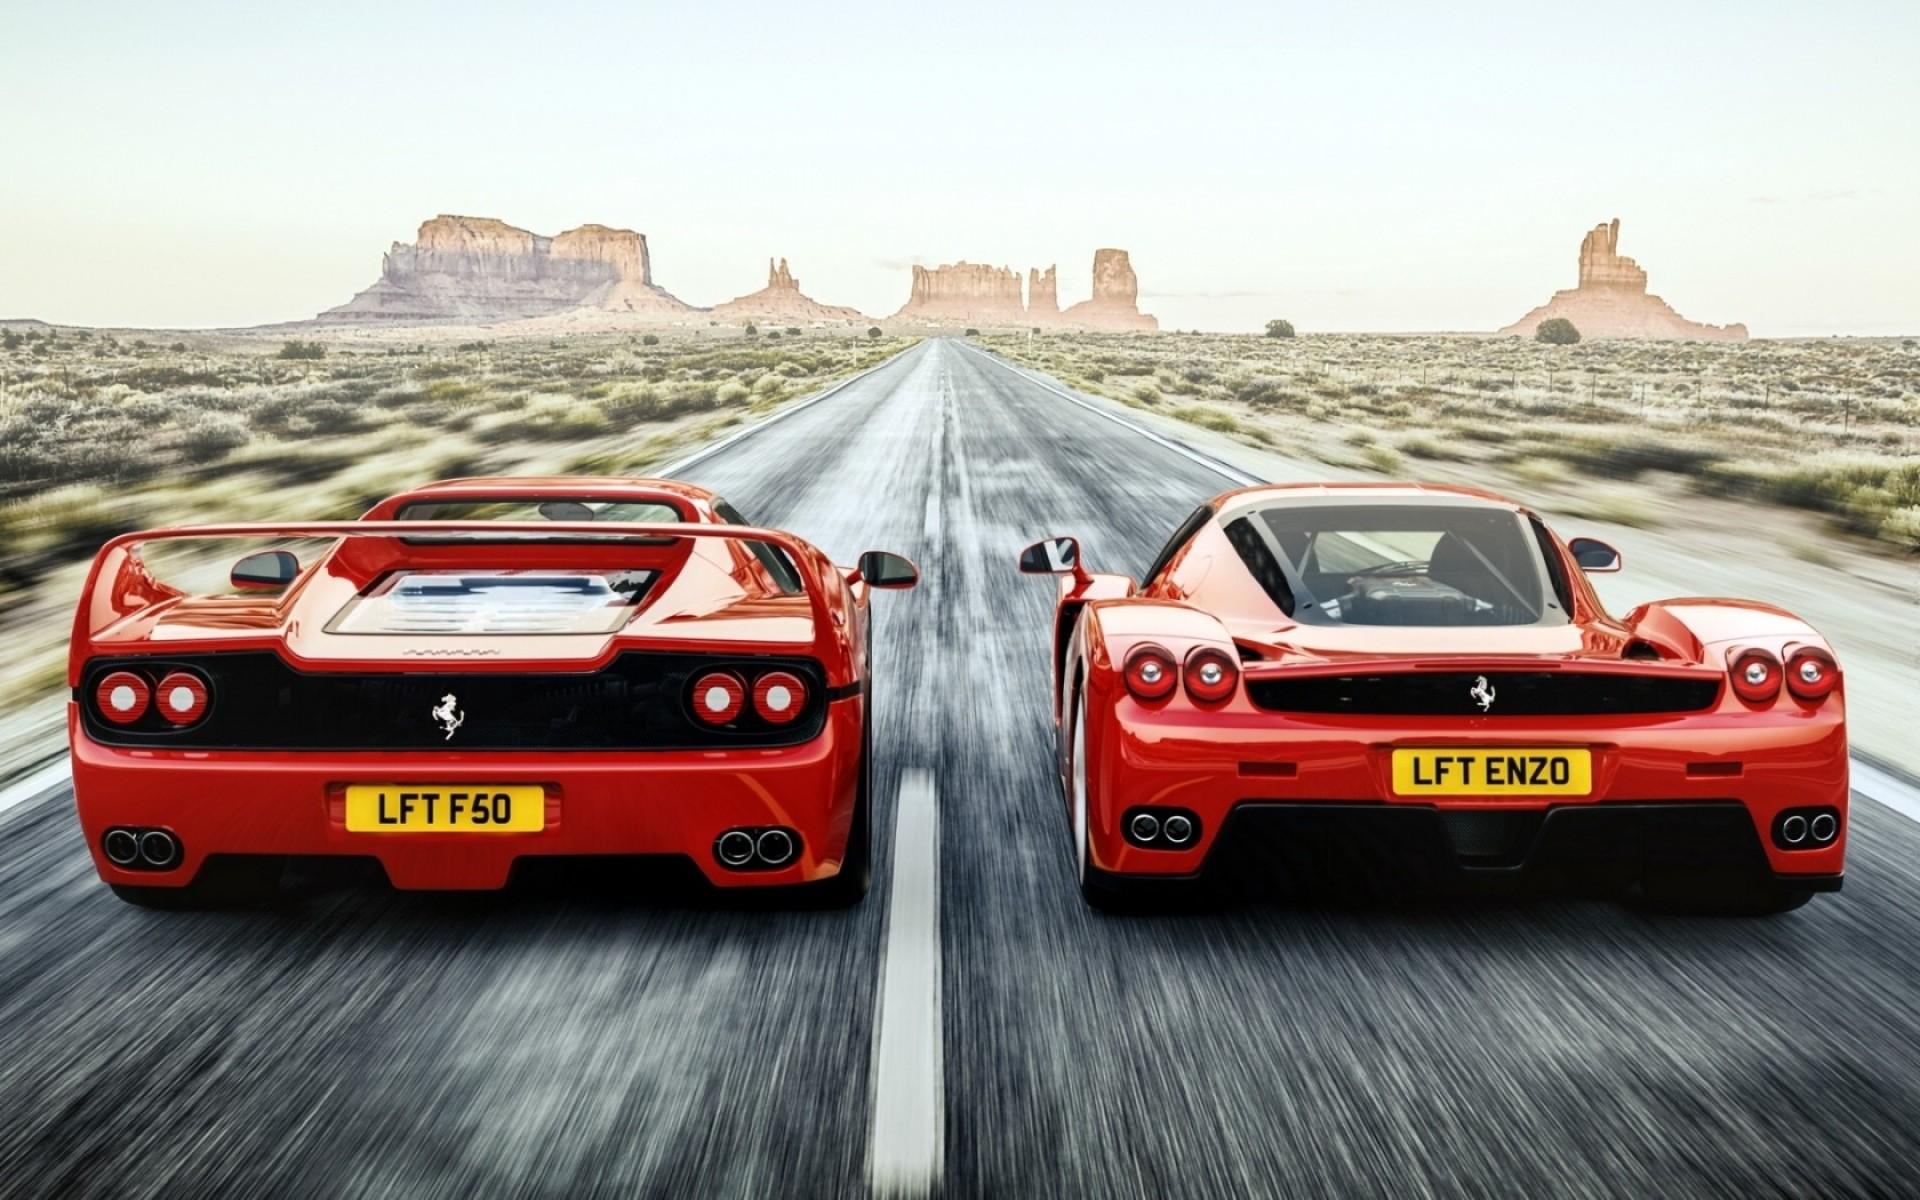 Ferrari HD Wallpapers 1000 Free Ferrari Wallpaper Images For All Devices